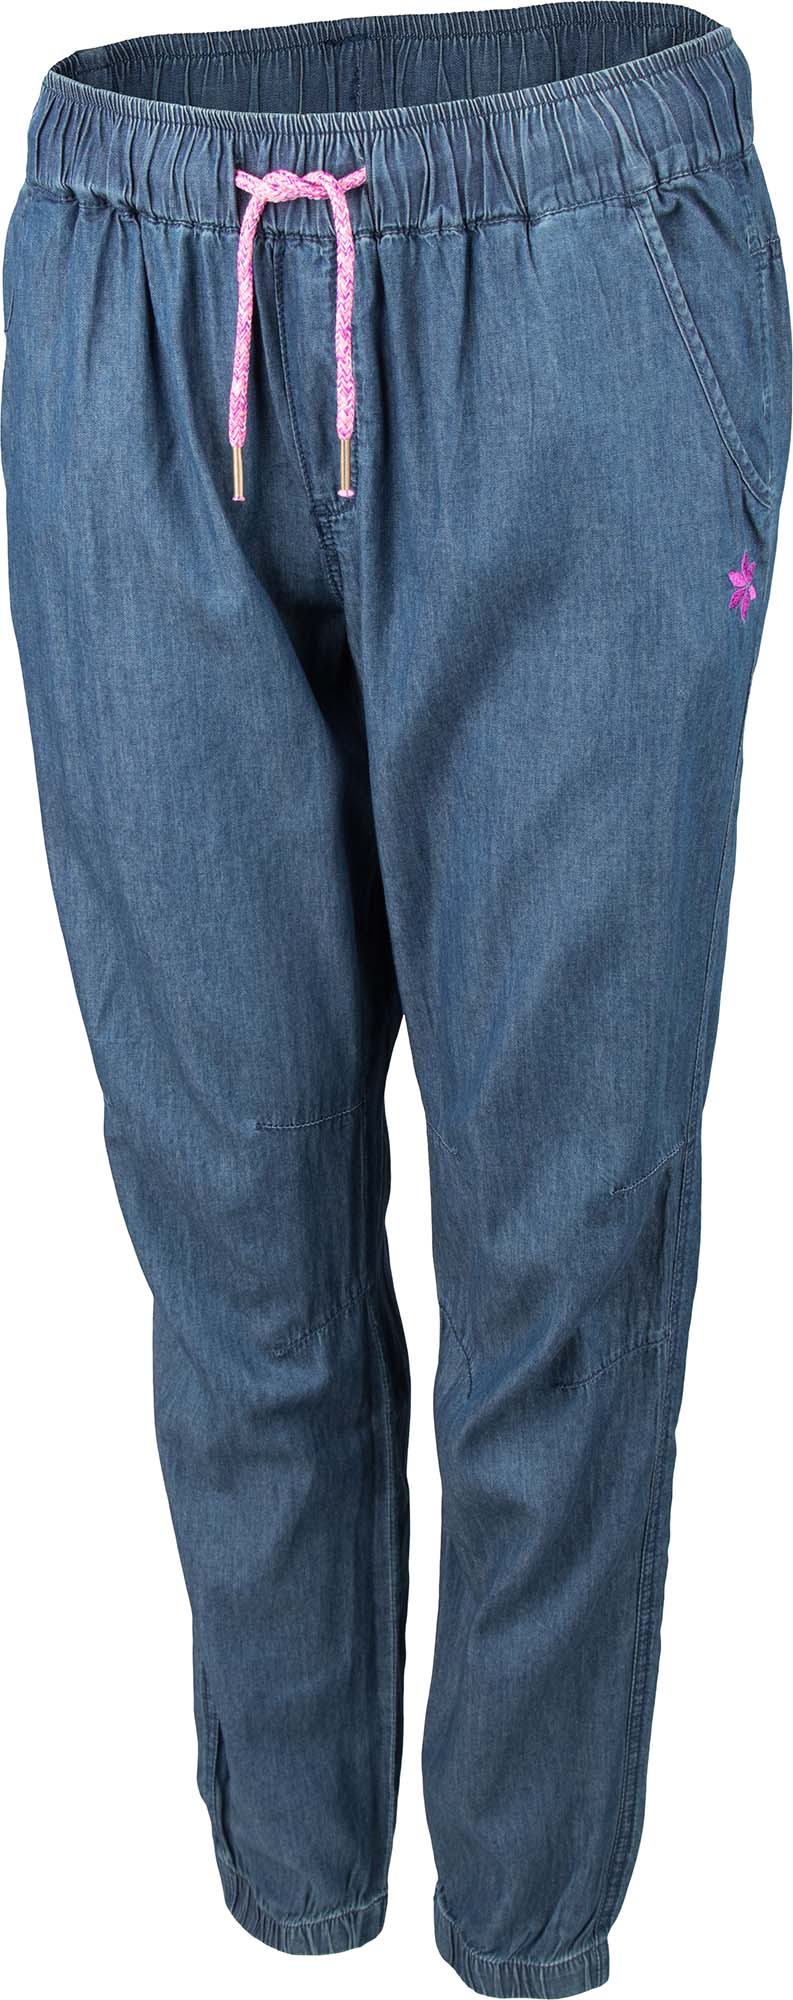 Women’s pants